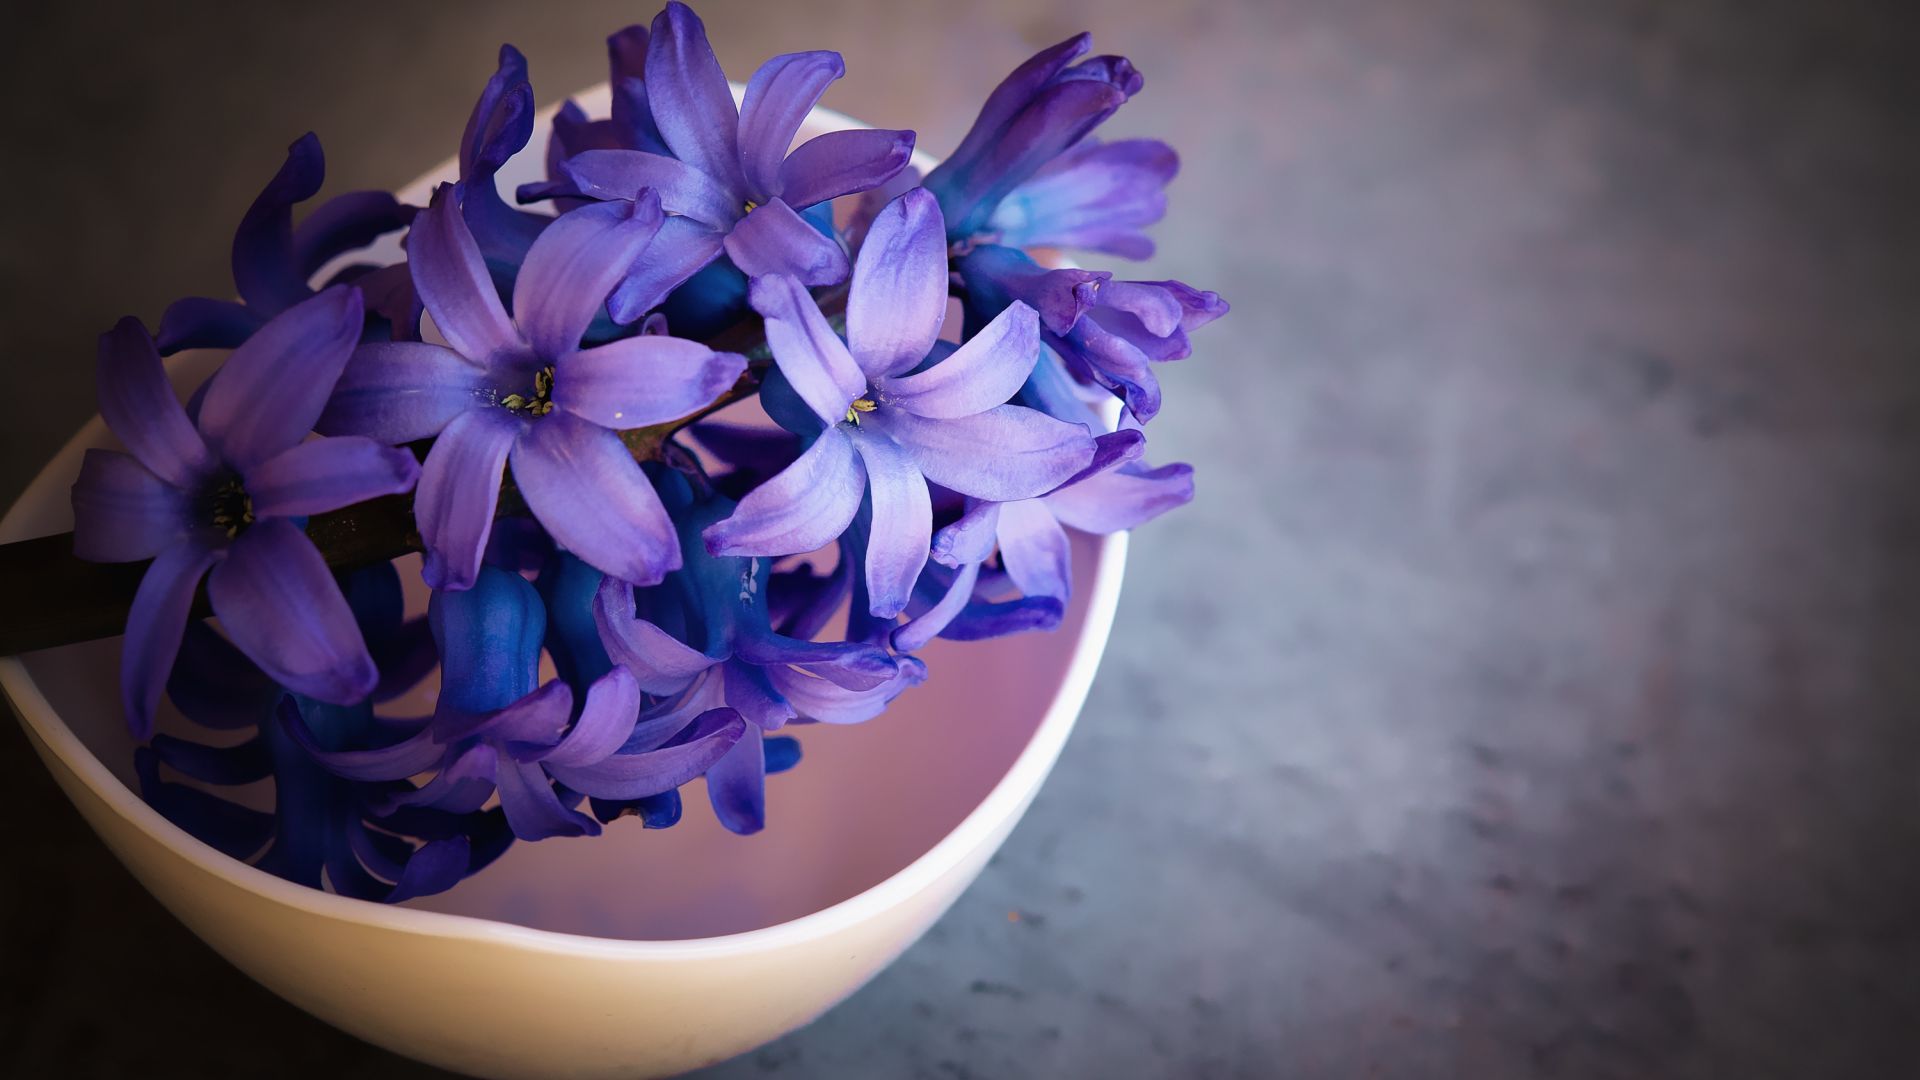 Wallpaper Hyacinth, purple flowers, backyard's pot, 4k